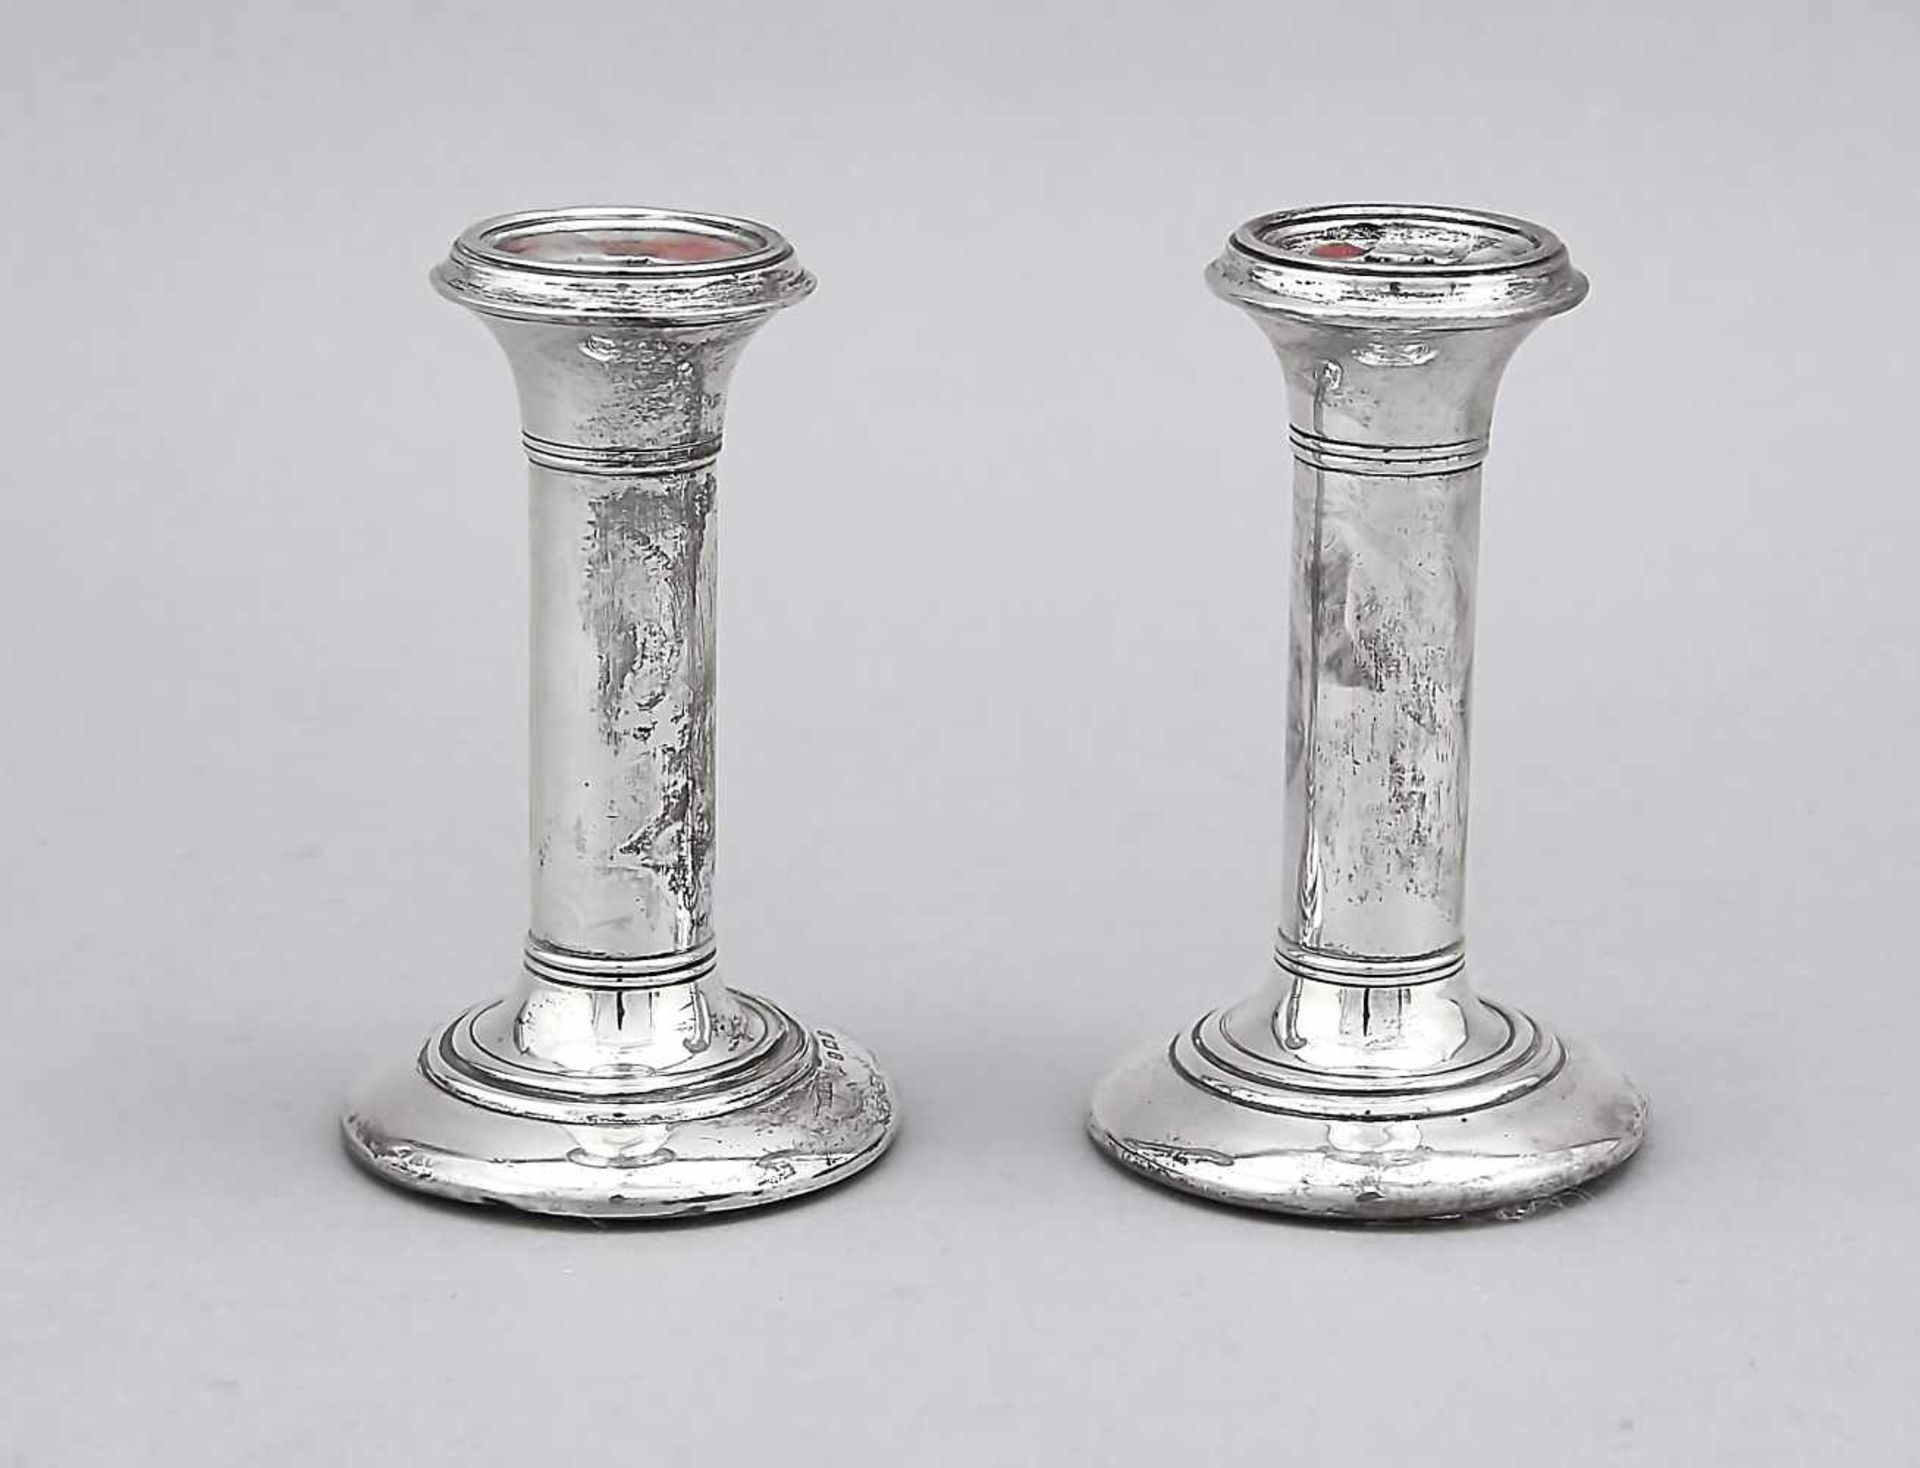 Pair of candlesticks, England, 1904, hallmarked Charles S. Green & Co., Ltd., Birmingham,